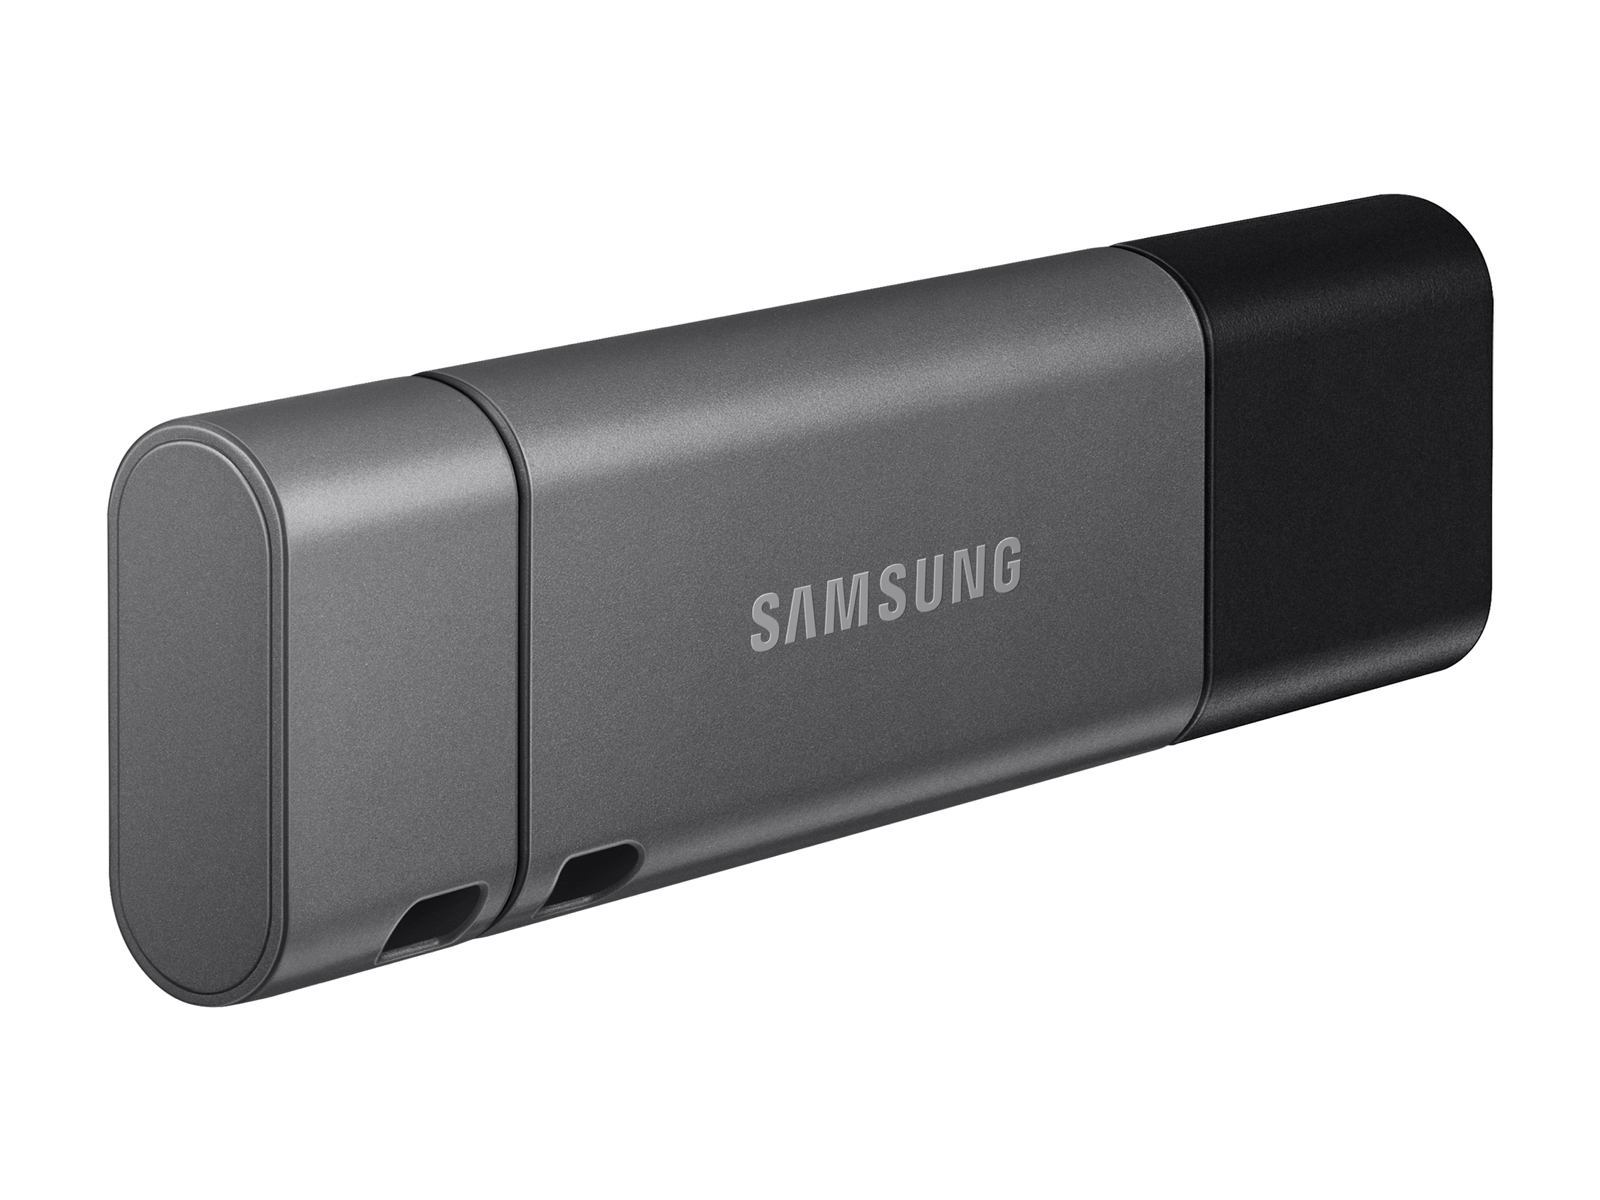 Samsung 256GB DUO Plus USB Type-C Flash Drive - Camera Gear